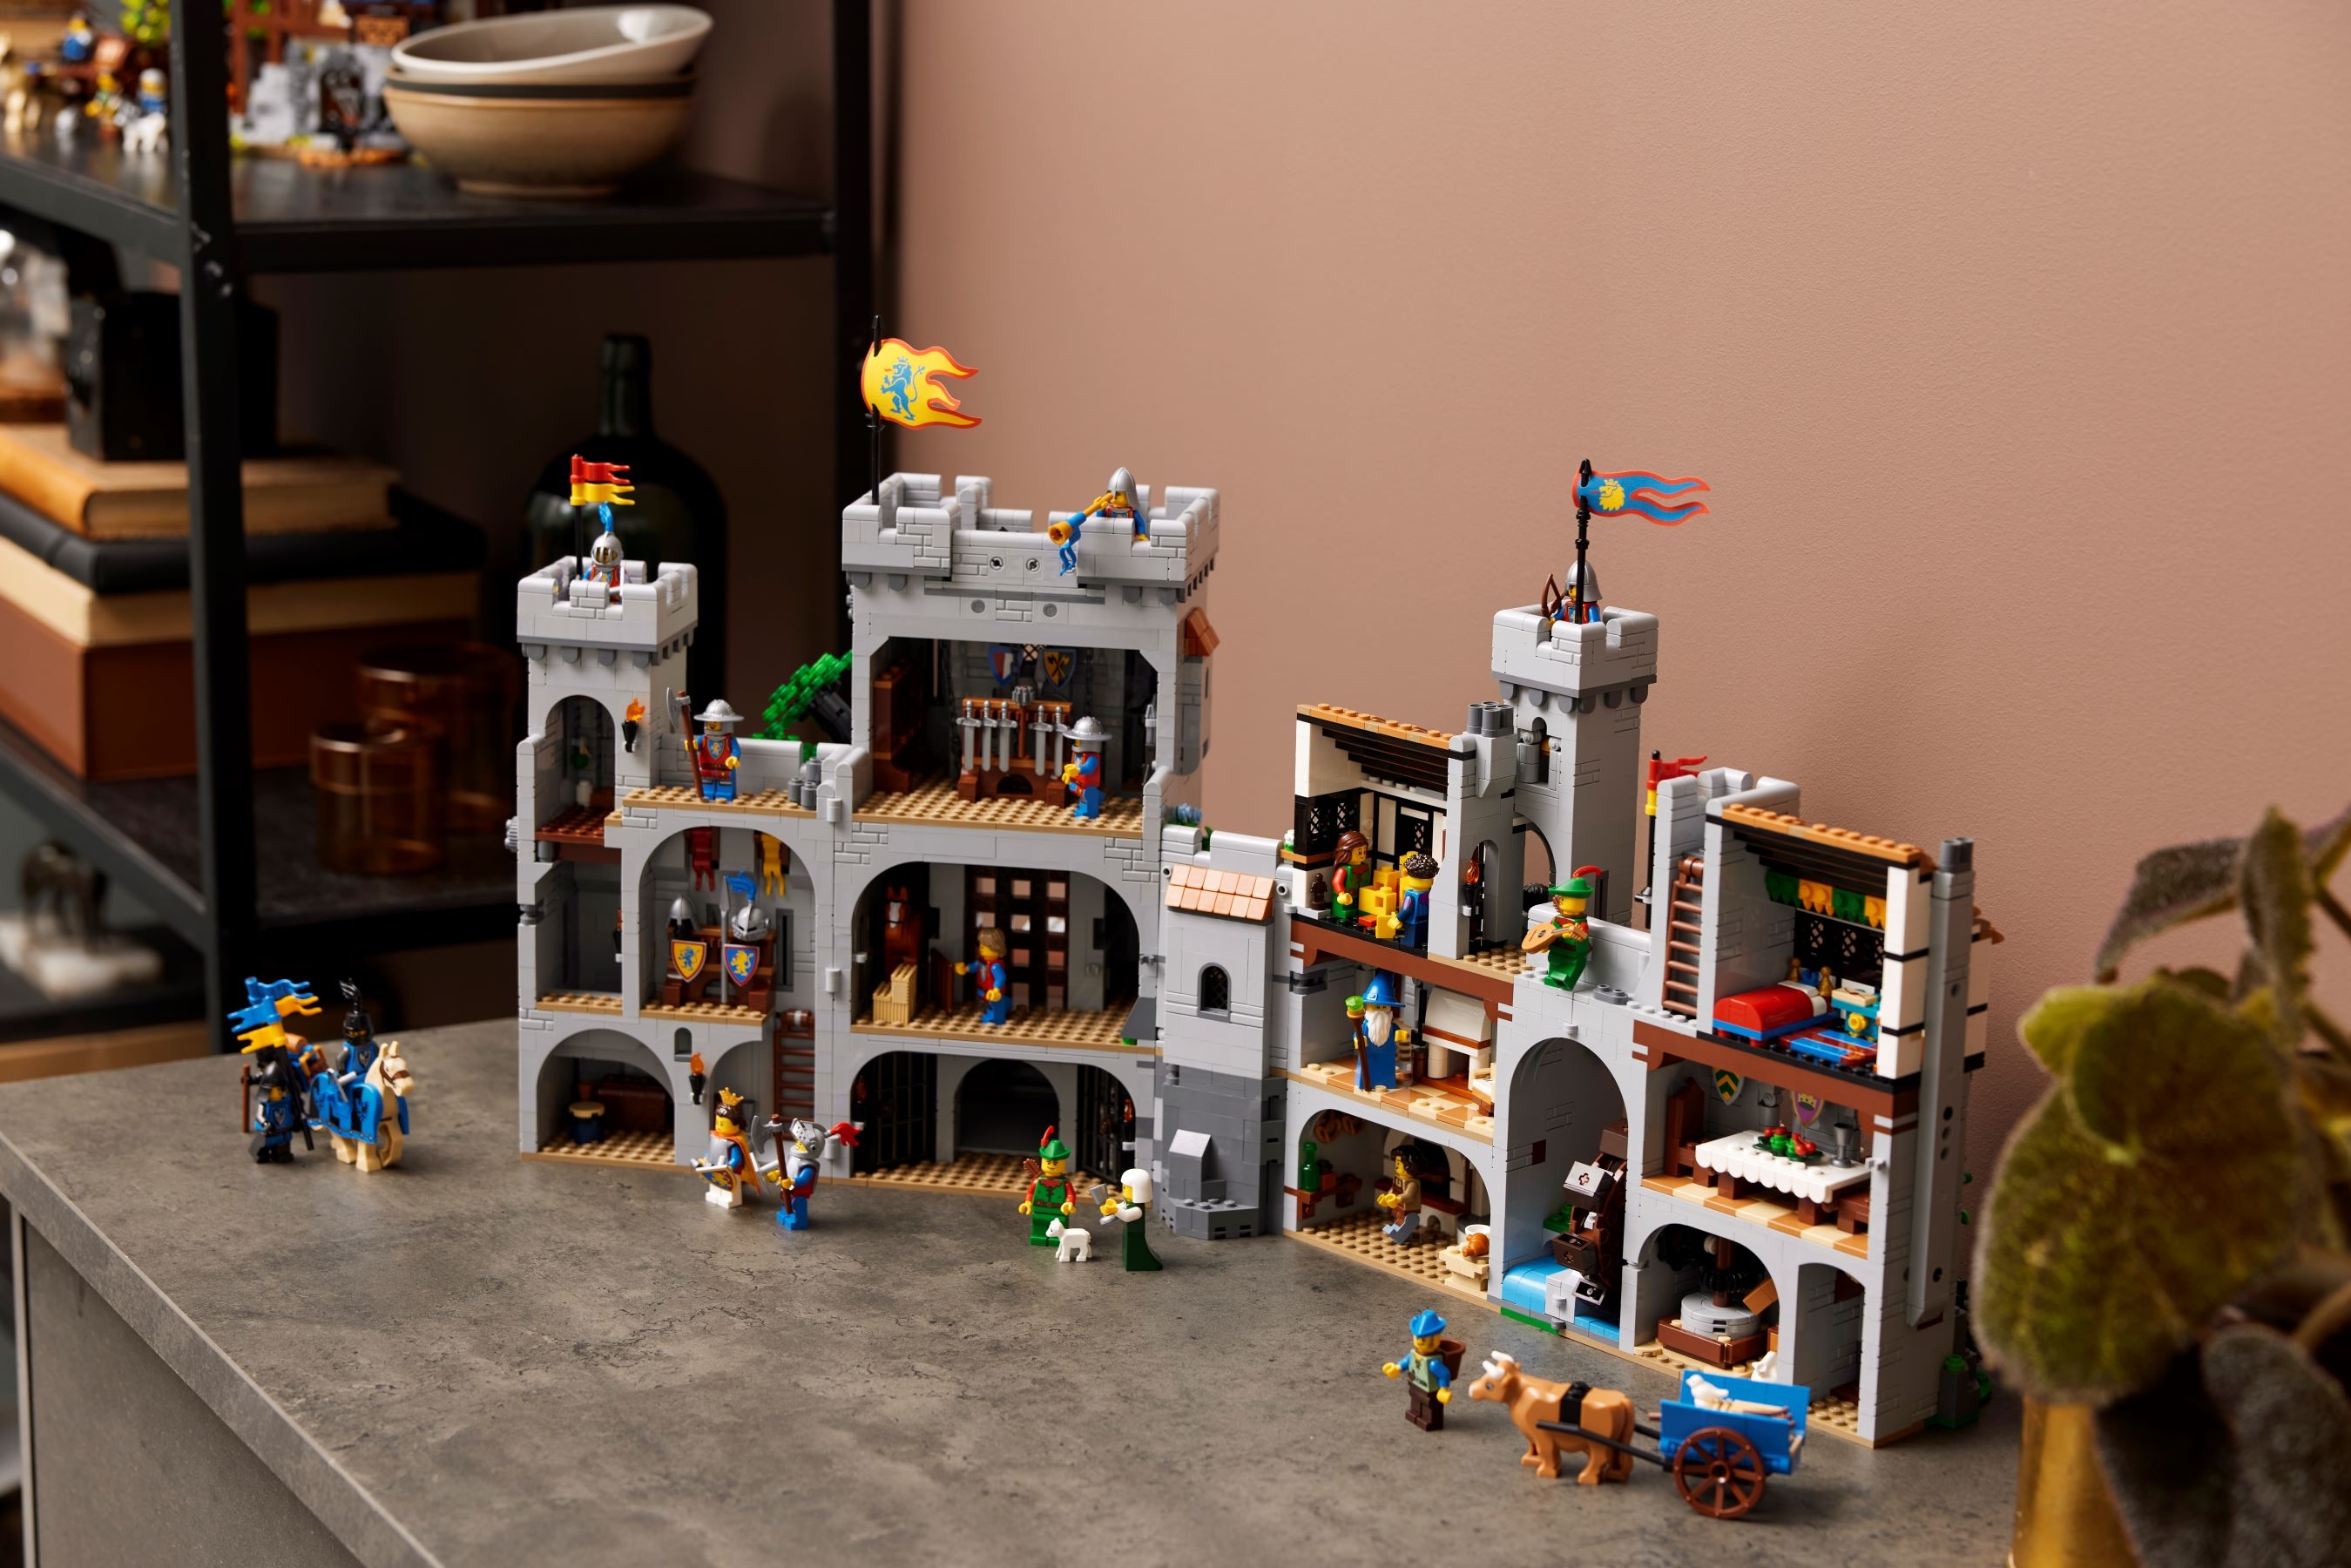 heldig Uden for ål Lion Knights' Castle 10305 | LEGO® Icons | Buy online at the Official LEGO®  Shop US